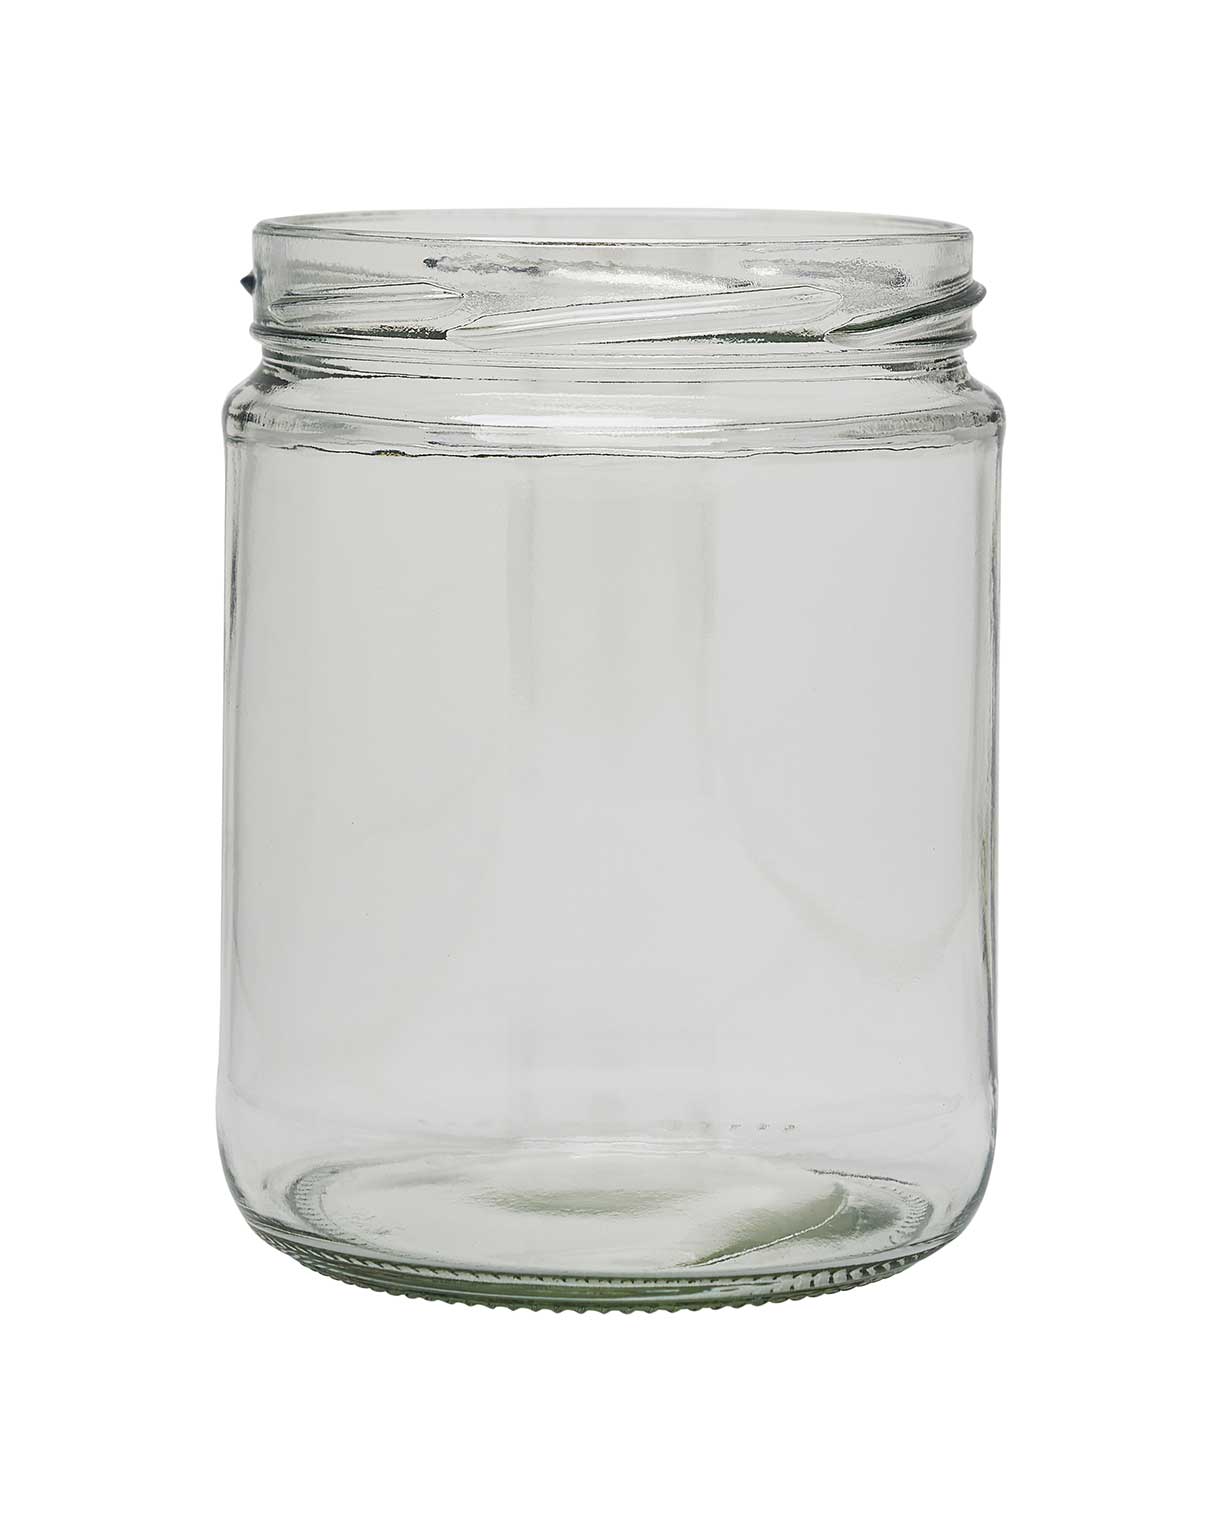 16 oz glass flint wide mouth jar 82 lug